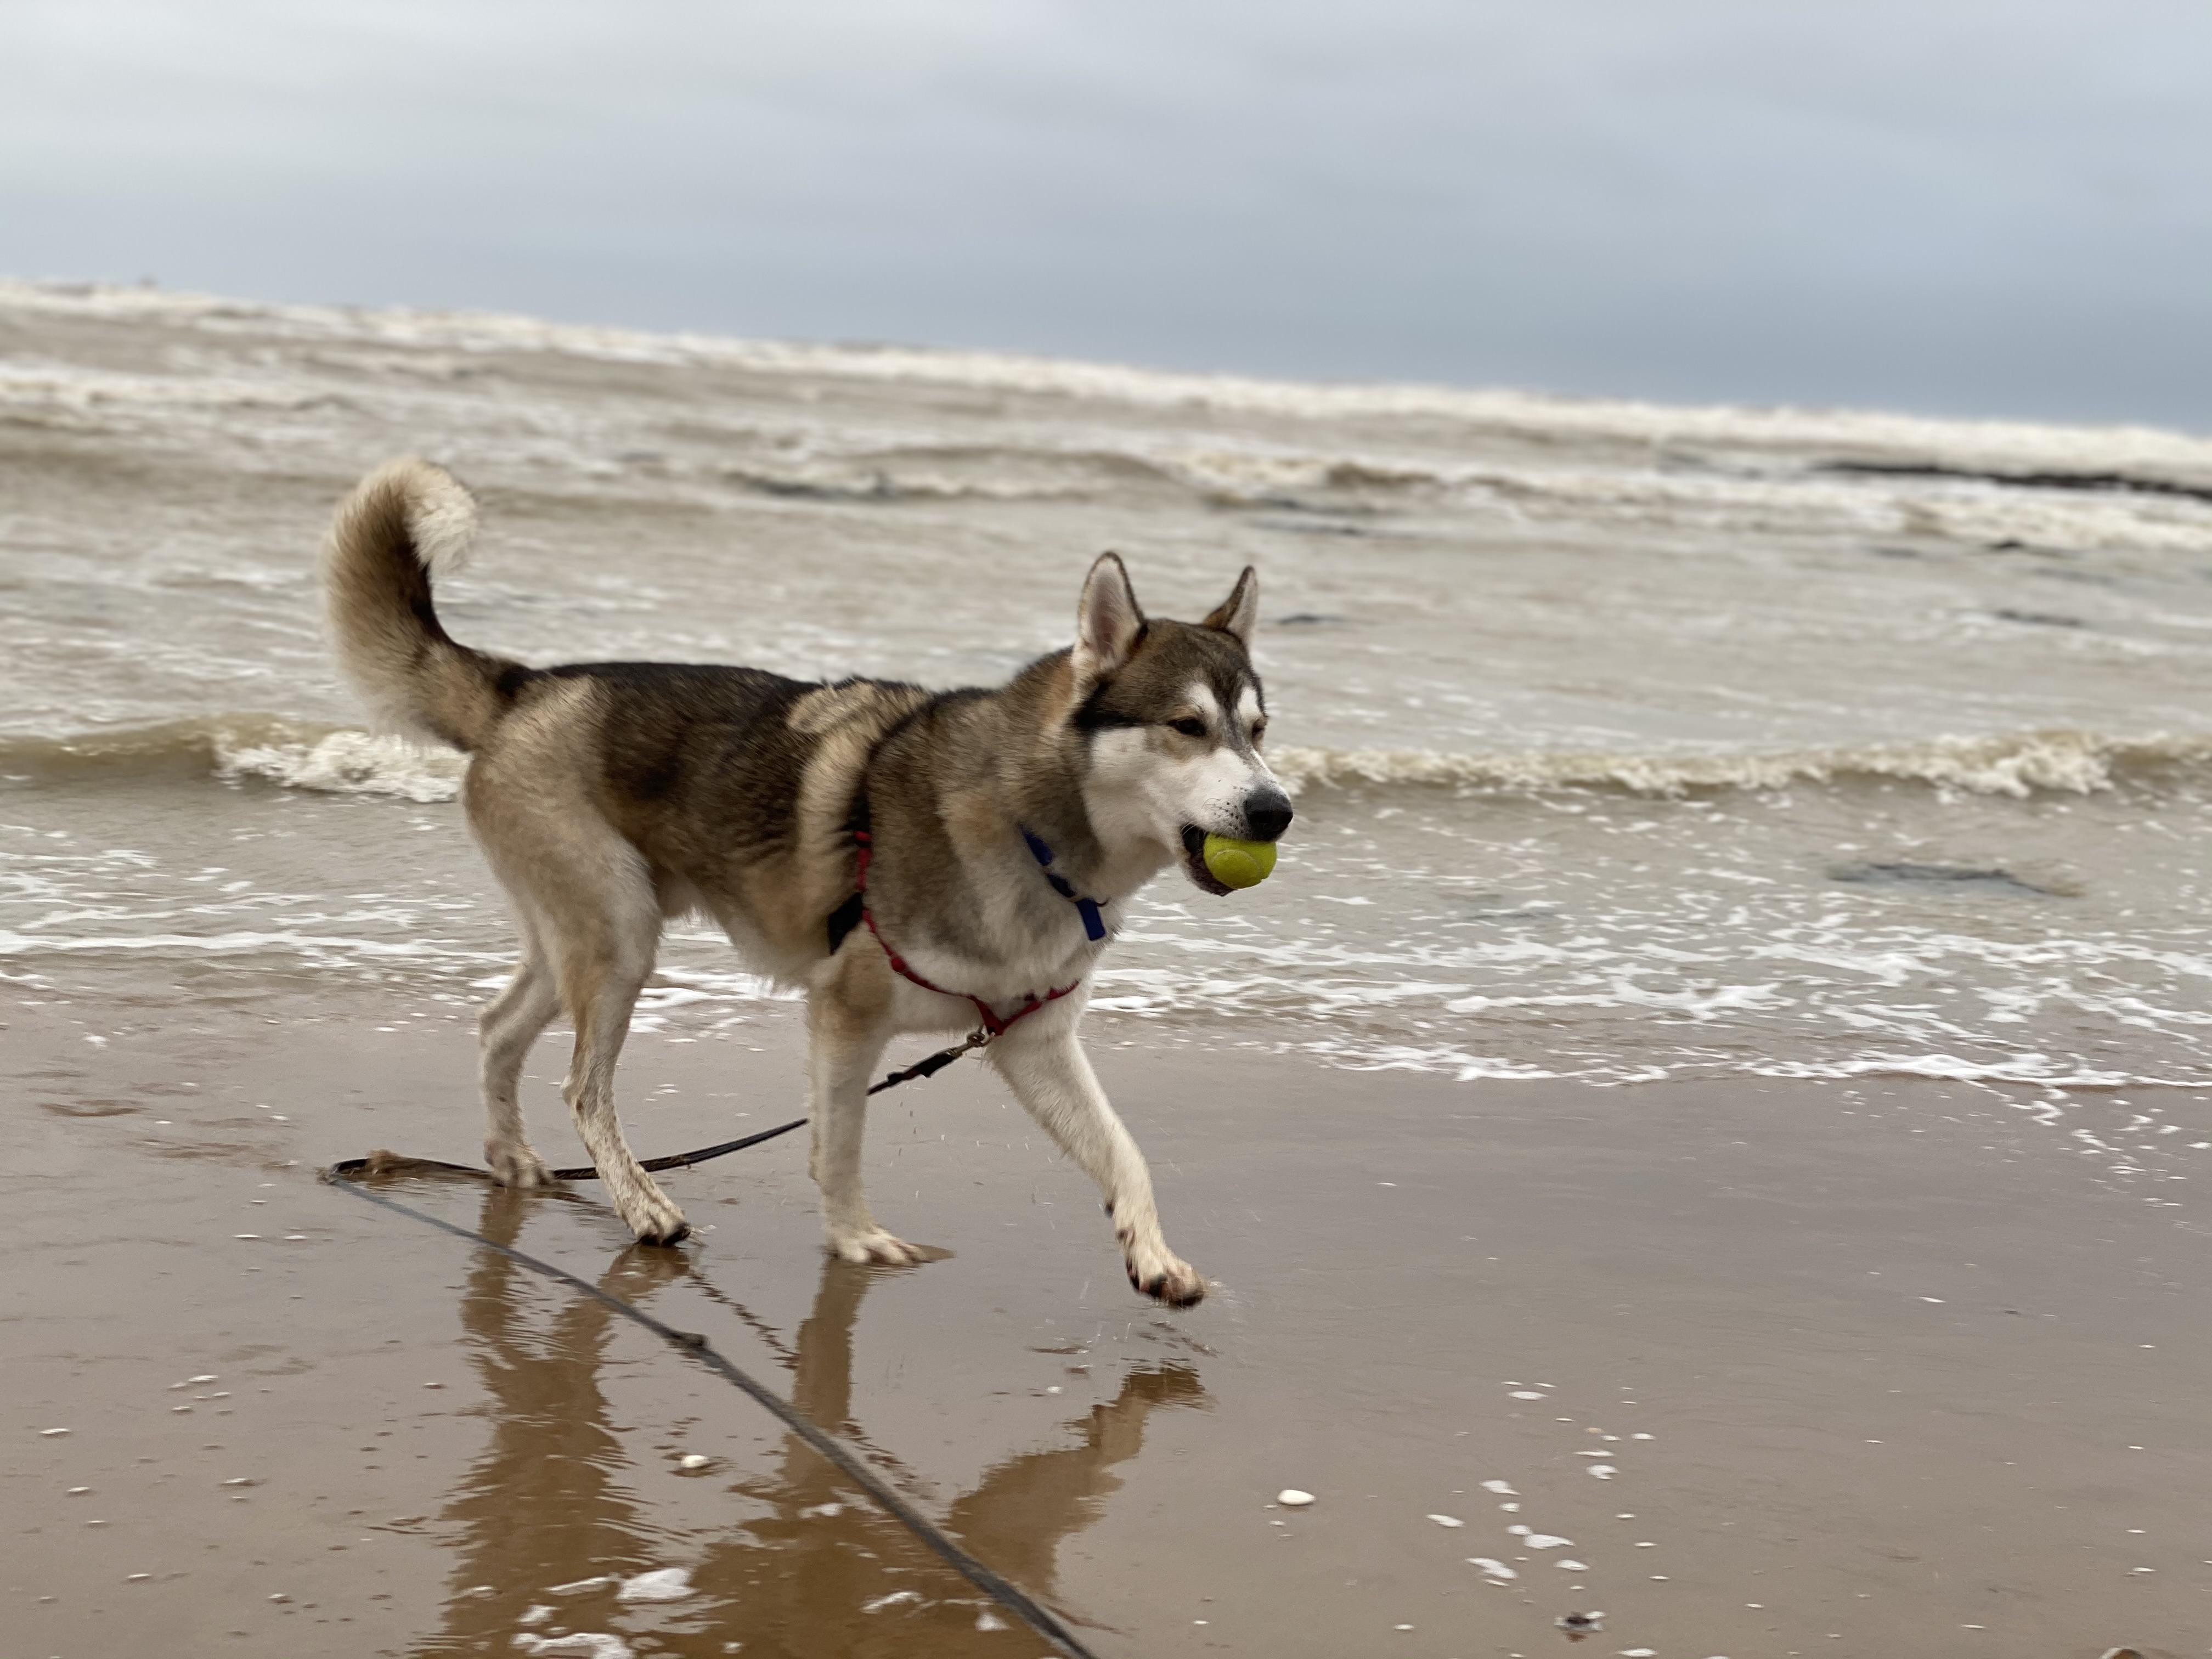 Koba enjoying himself on the beach, tennis ball in mouth